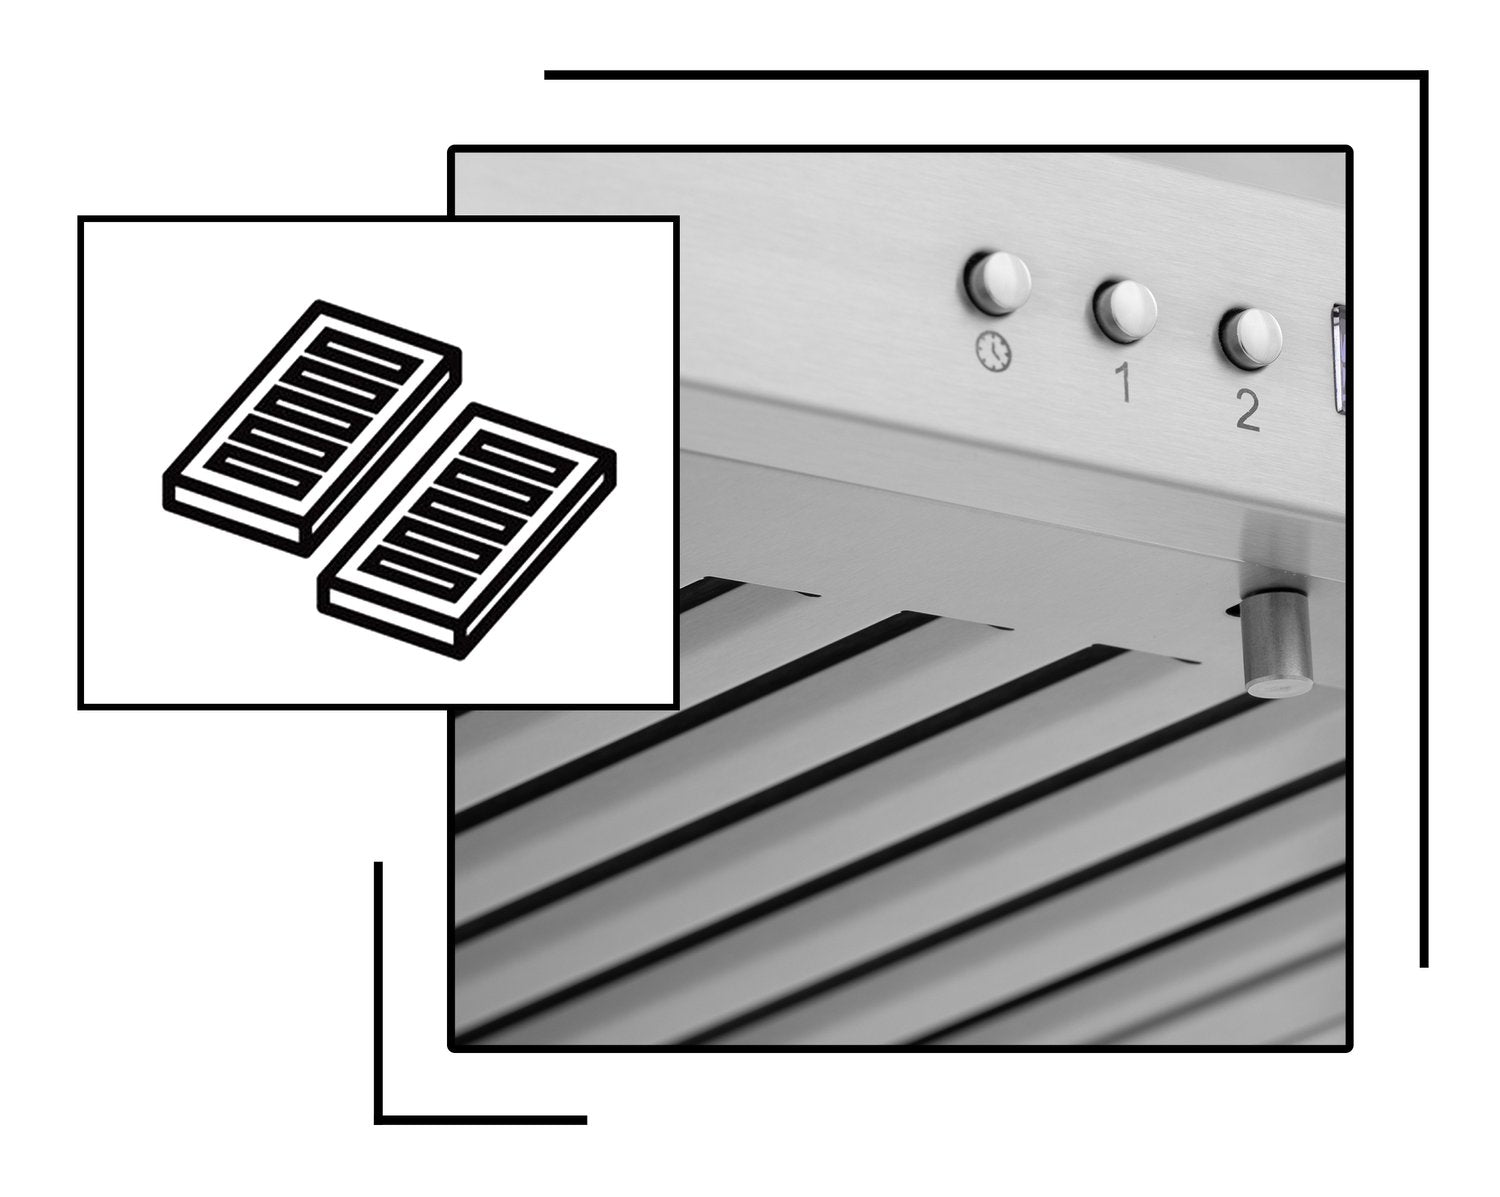 Icon and image representing dishwasher safe range hood baffle filters